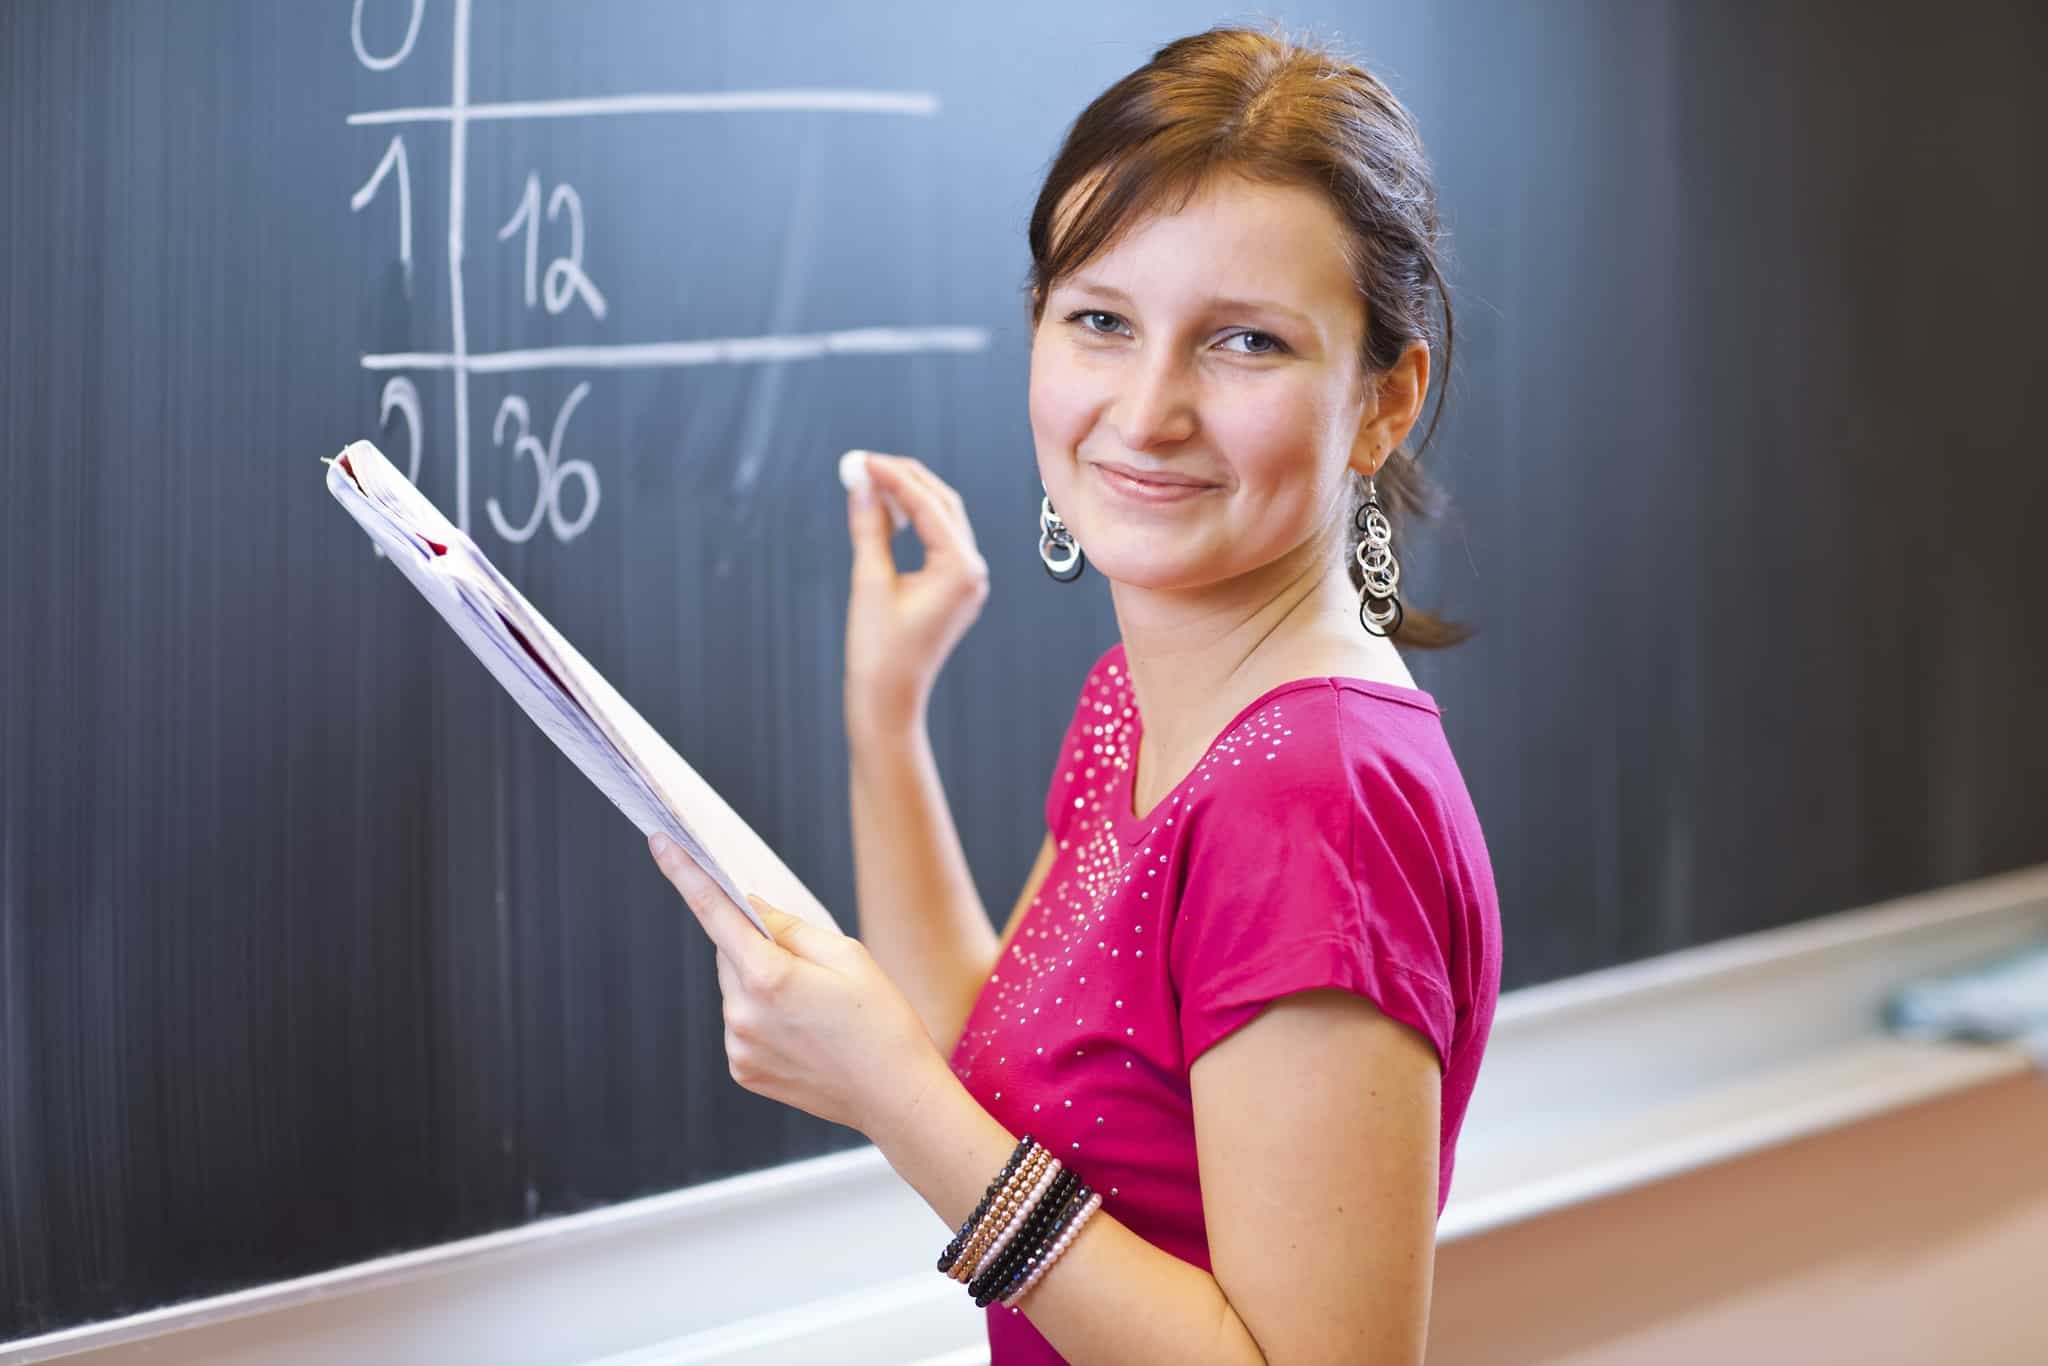 A Caucasian female math teacher